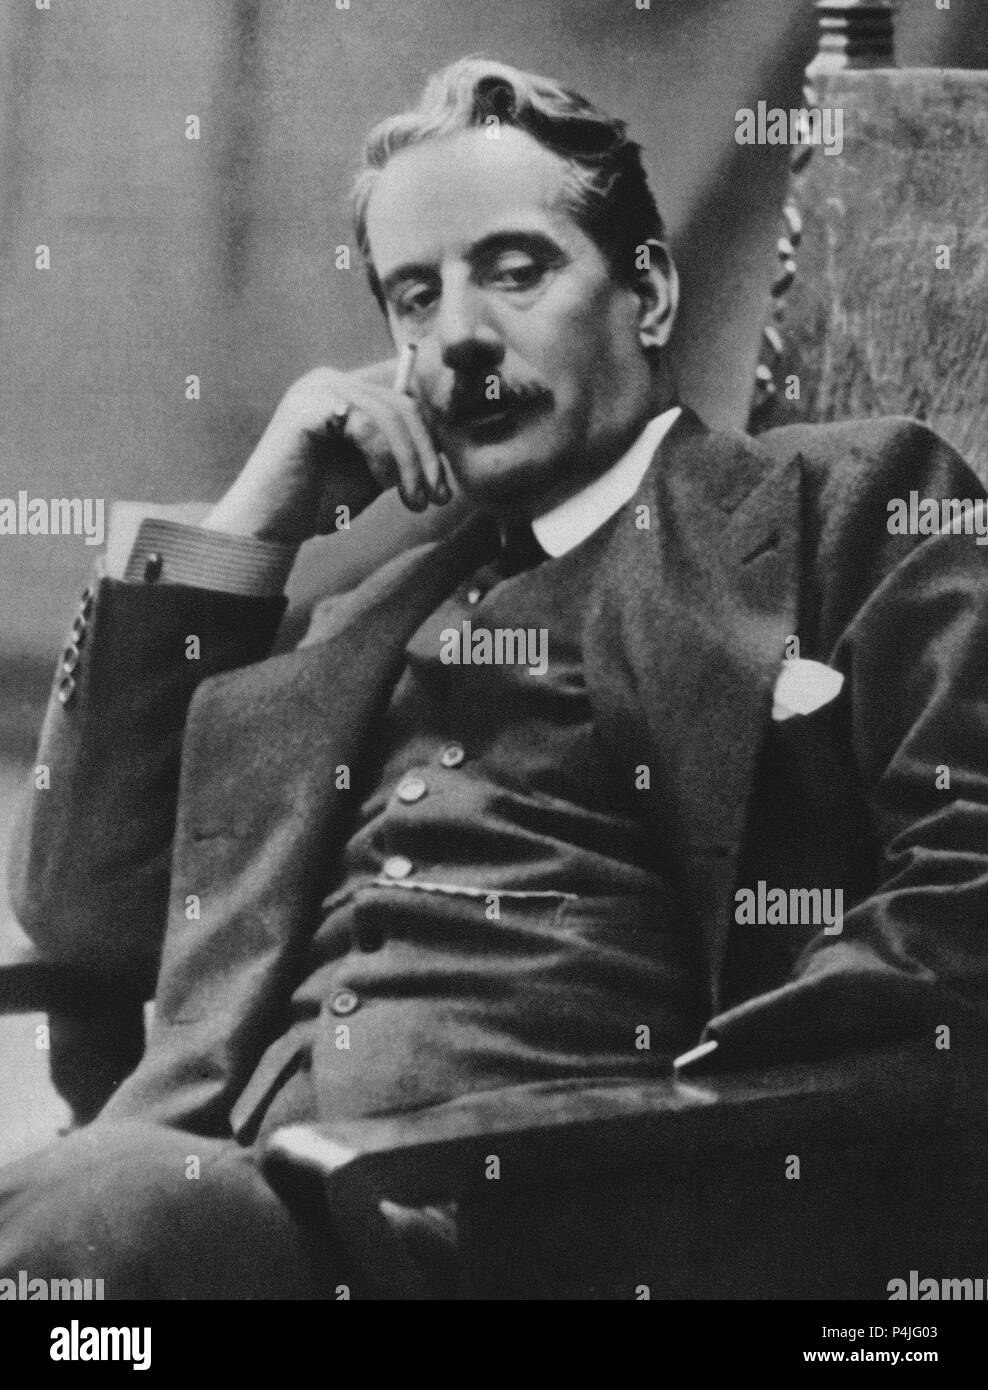 GIACOMO Puccini (1858-1924) - compositeur ITALIANO DE OPÉRAS - FOTOGRAFIA DE 1910. Lieu : INSTITUTO DE COOPERACION IBEROAMERICANA, MADRID, ESPAGNE. Banque D'Images